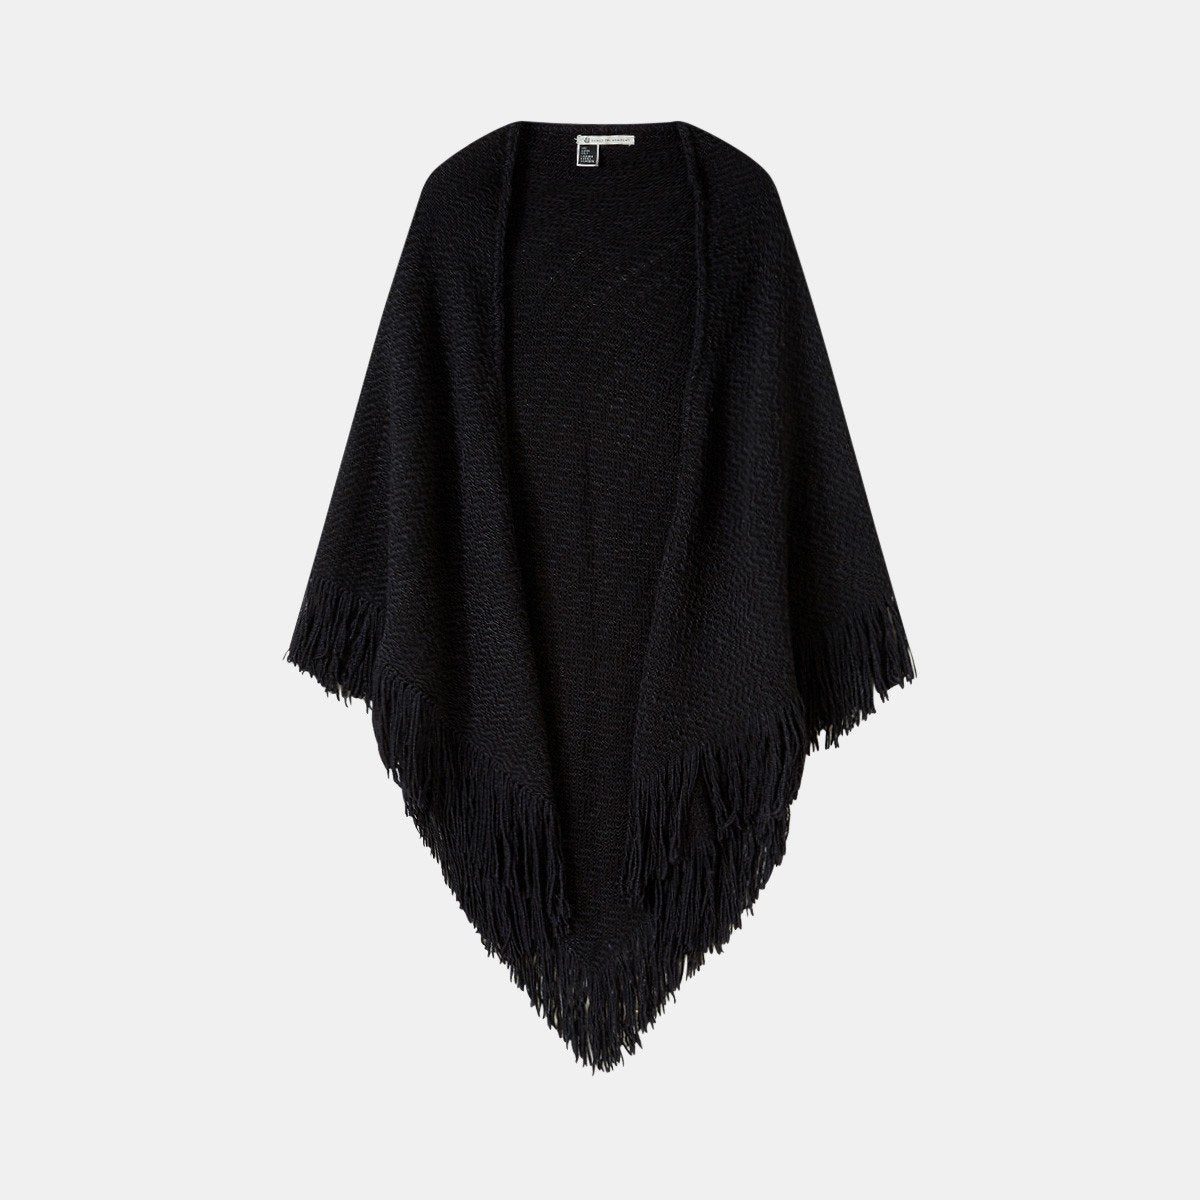 Aessai Knitwear Sucre Shawl in Black – Merino wool – One Size – Luxury Marino Wool – Fairtrade & Sustainable – Aessai